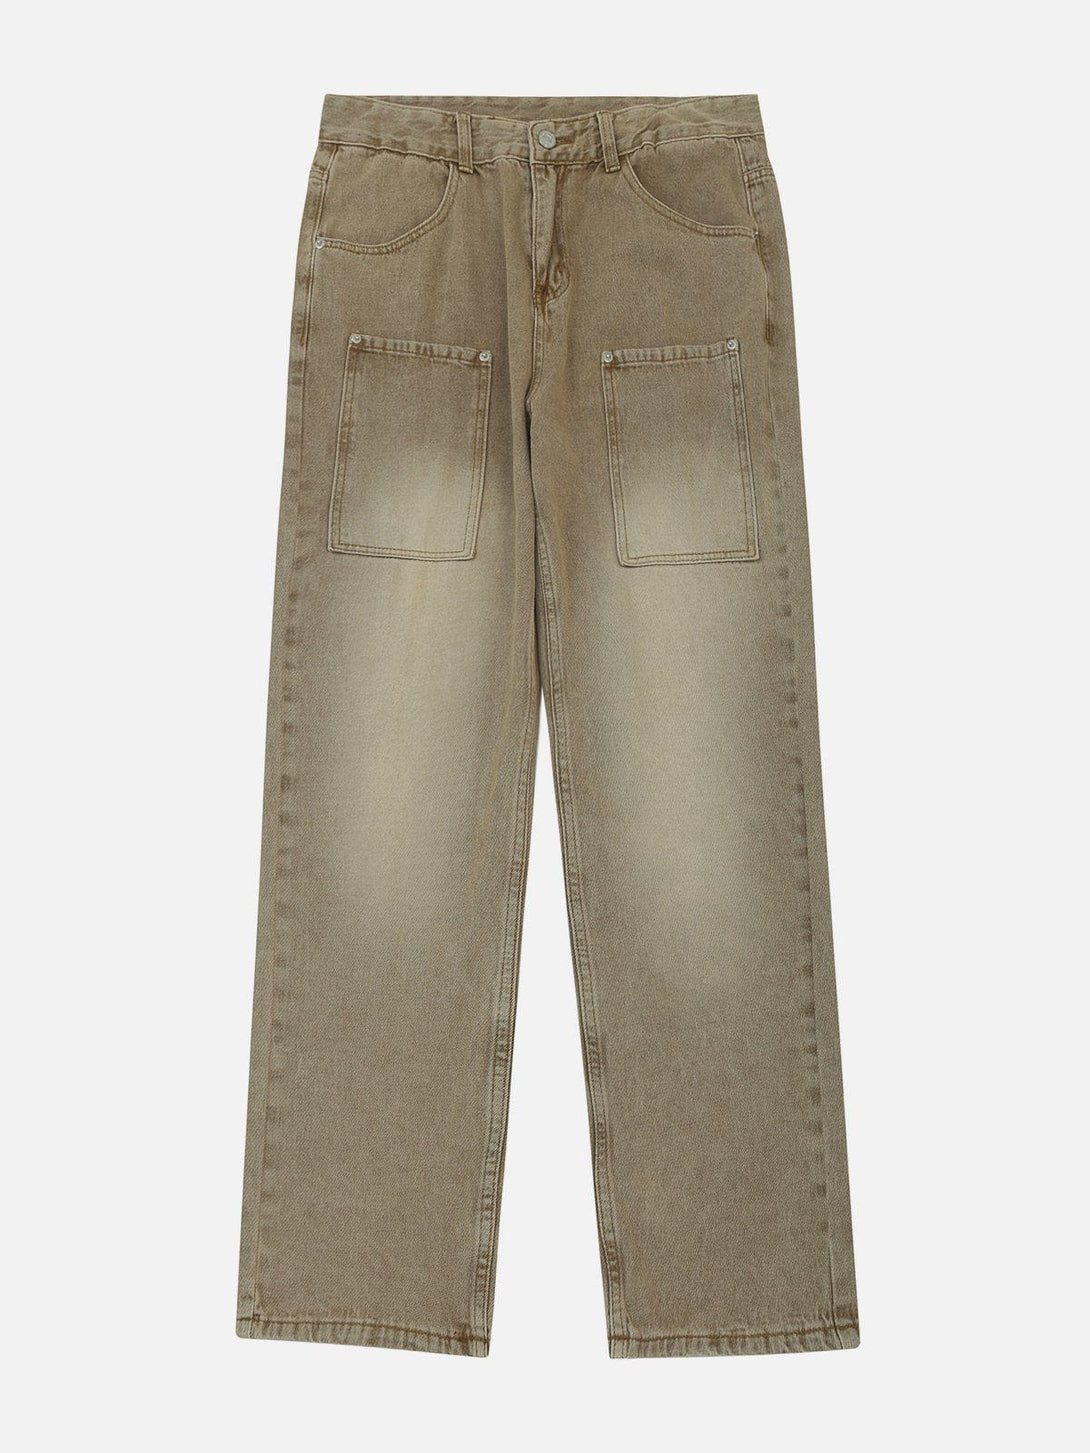 AlanBalen® - Vintage Washed ZIP UP Jeans AlanBalen